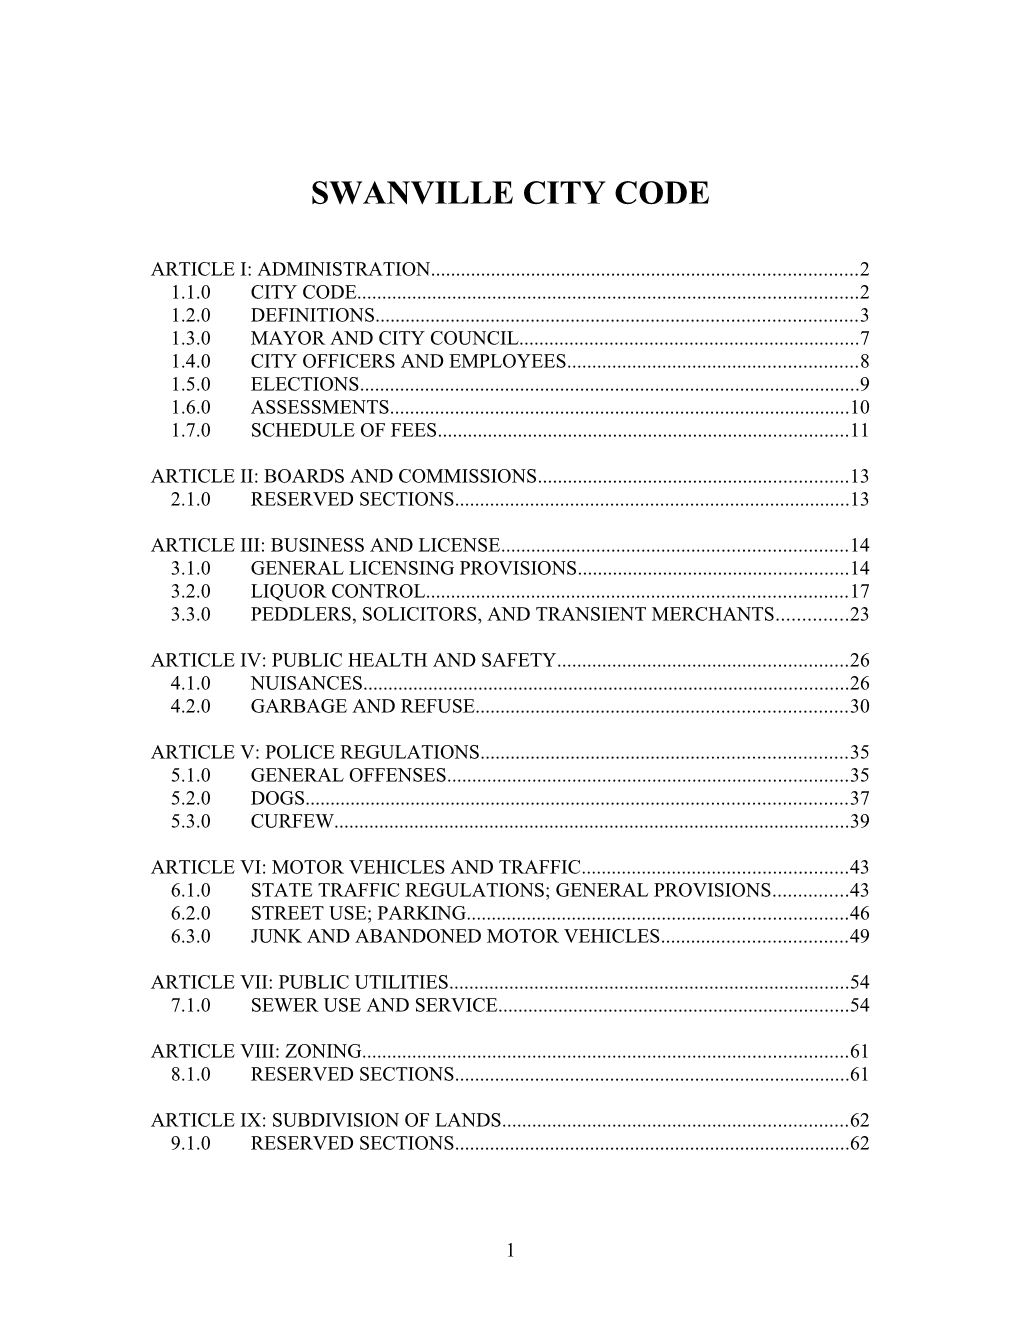 Swanville City Code